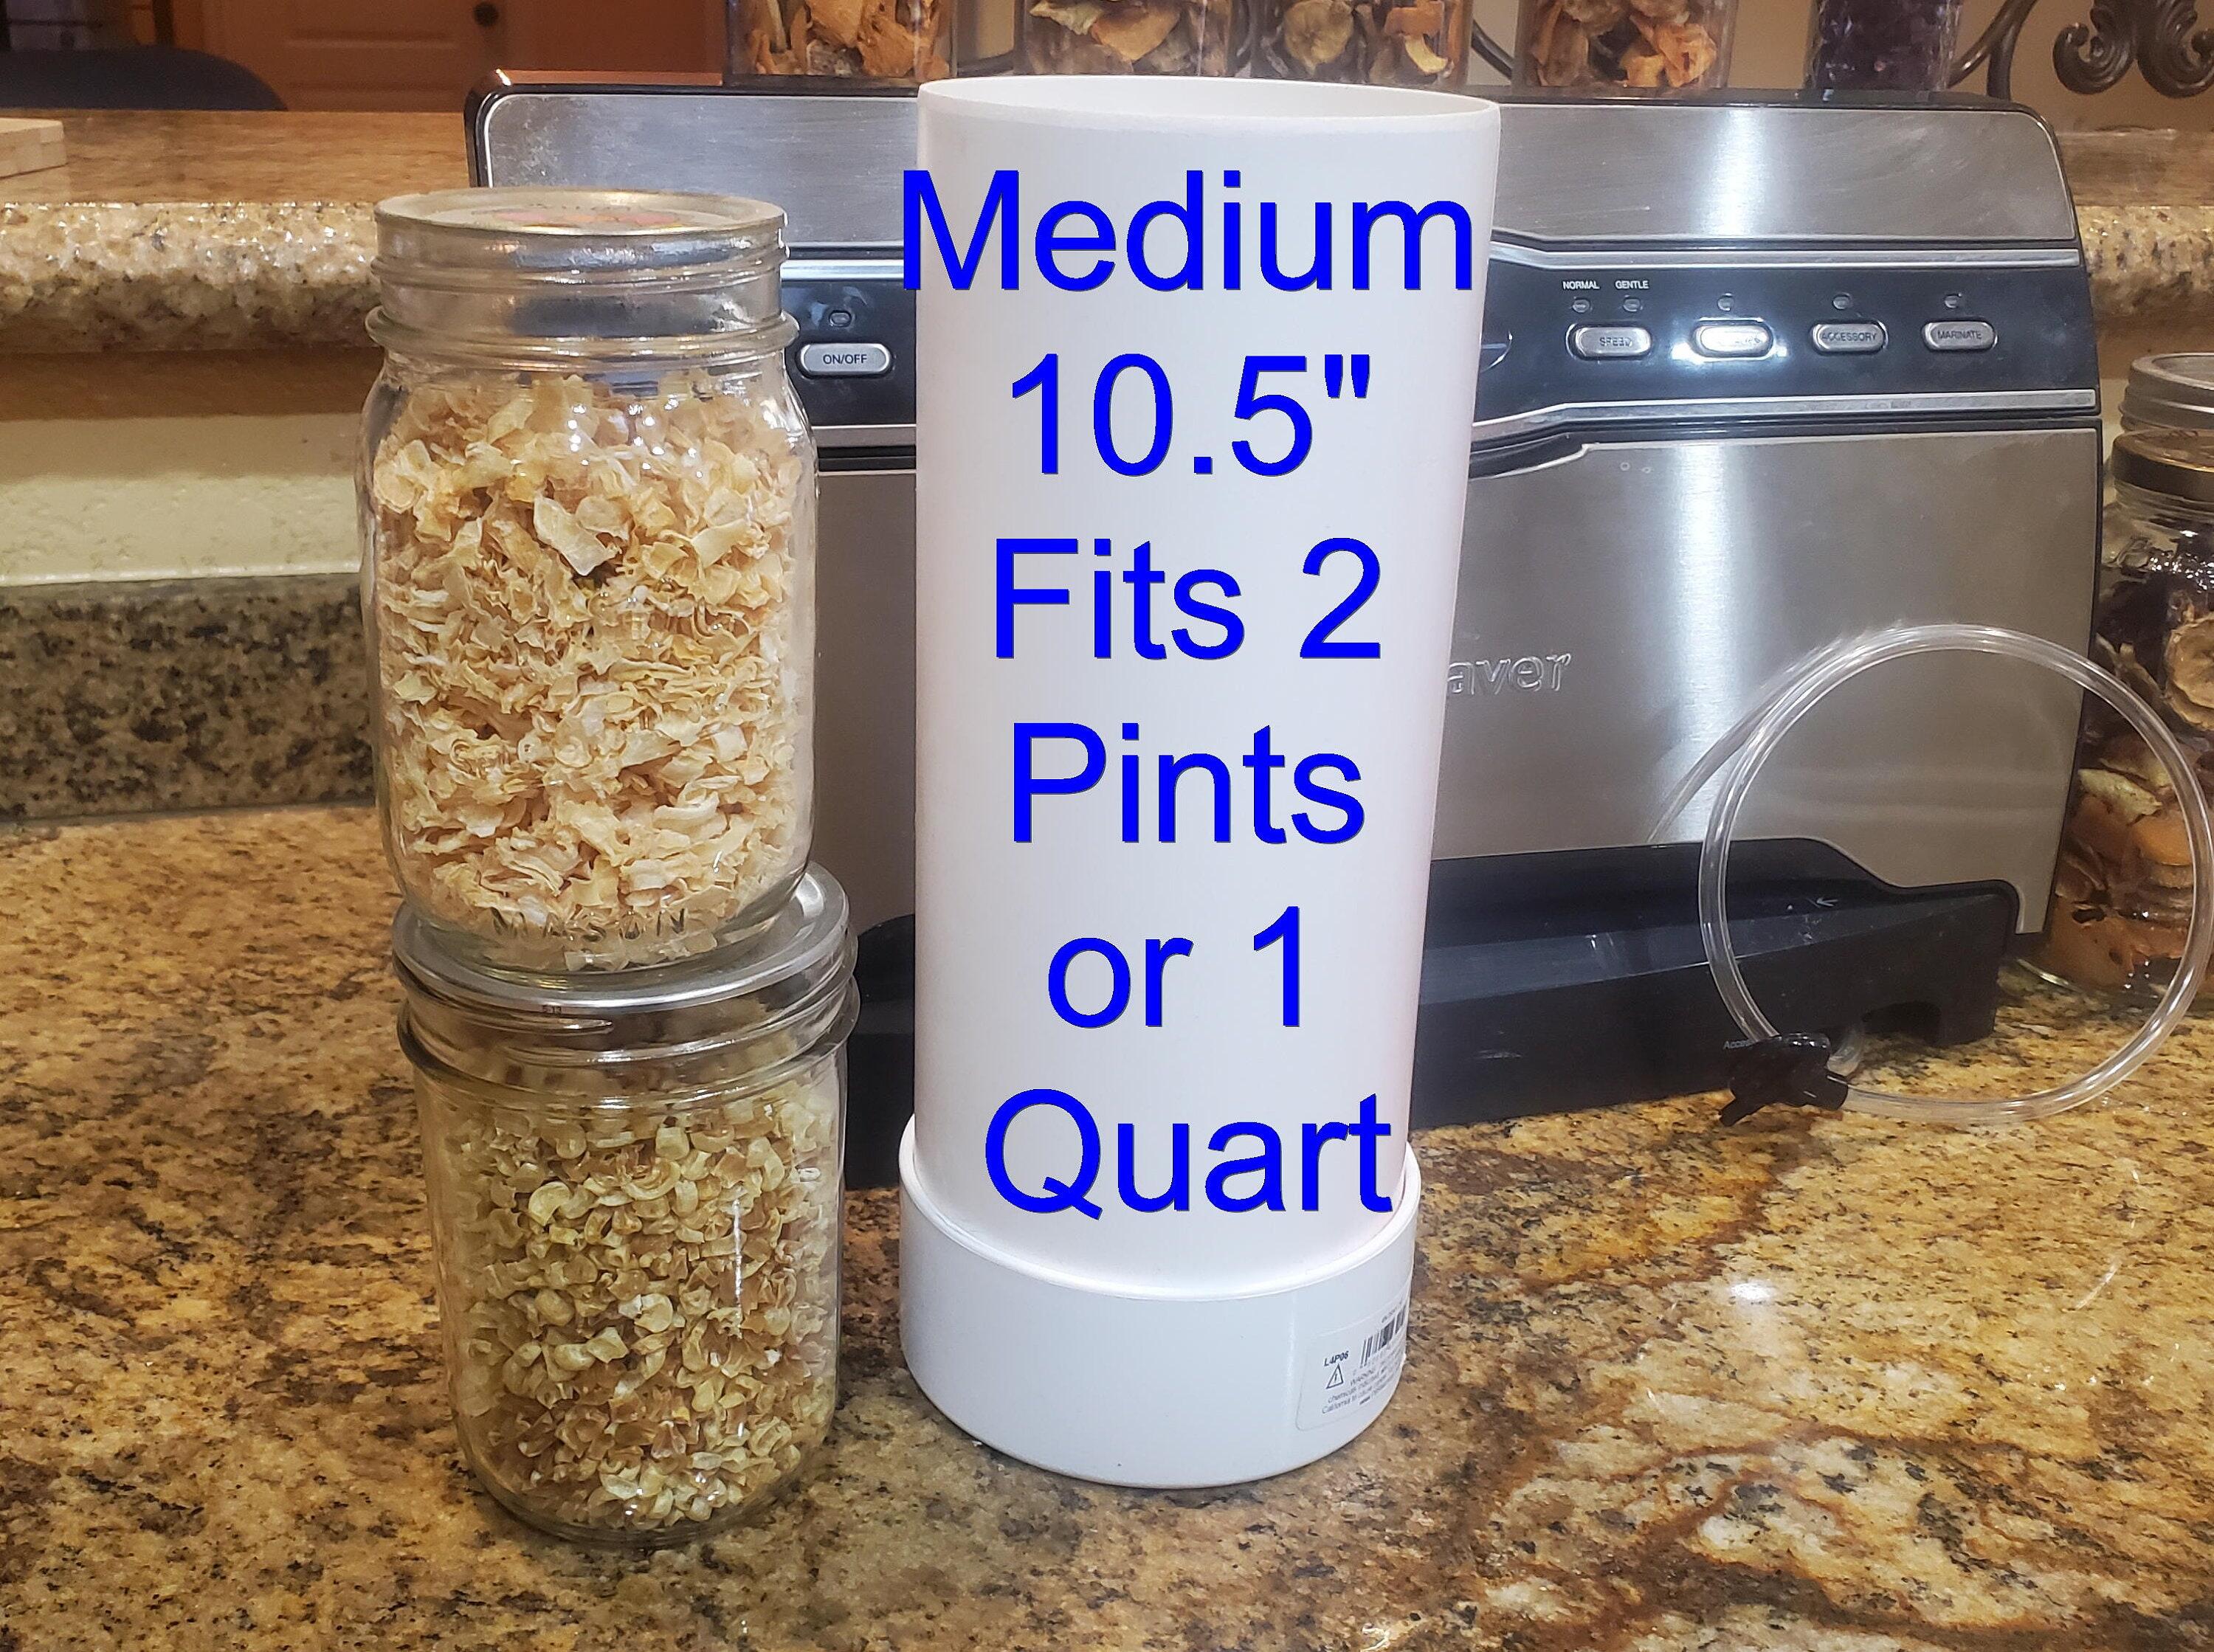 How to Vacuum Seal Juice & Food in a Mason Jar Using a Vacuum